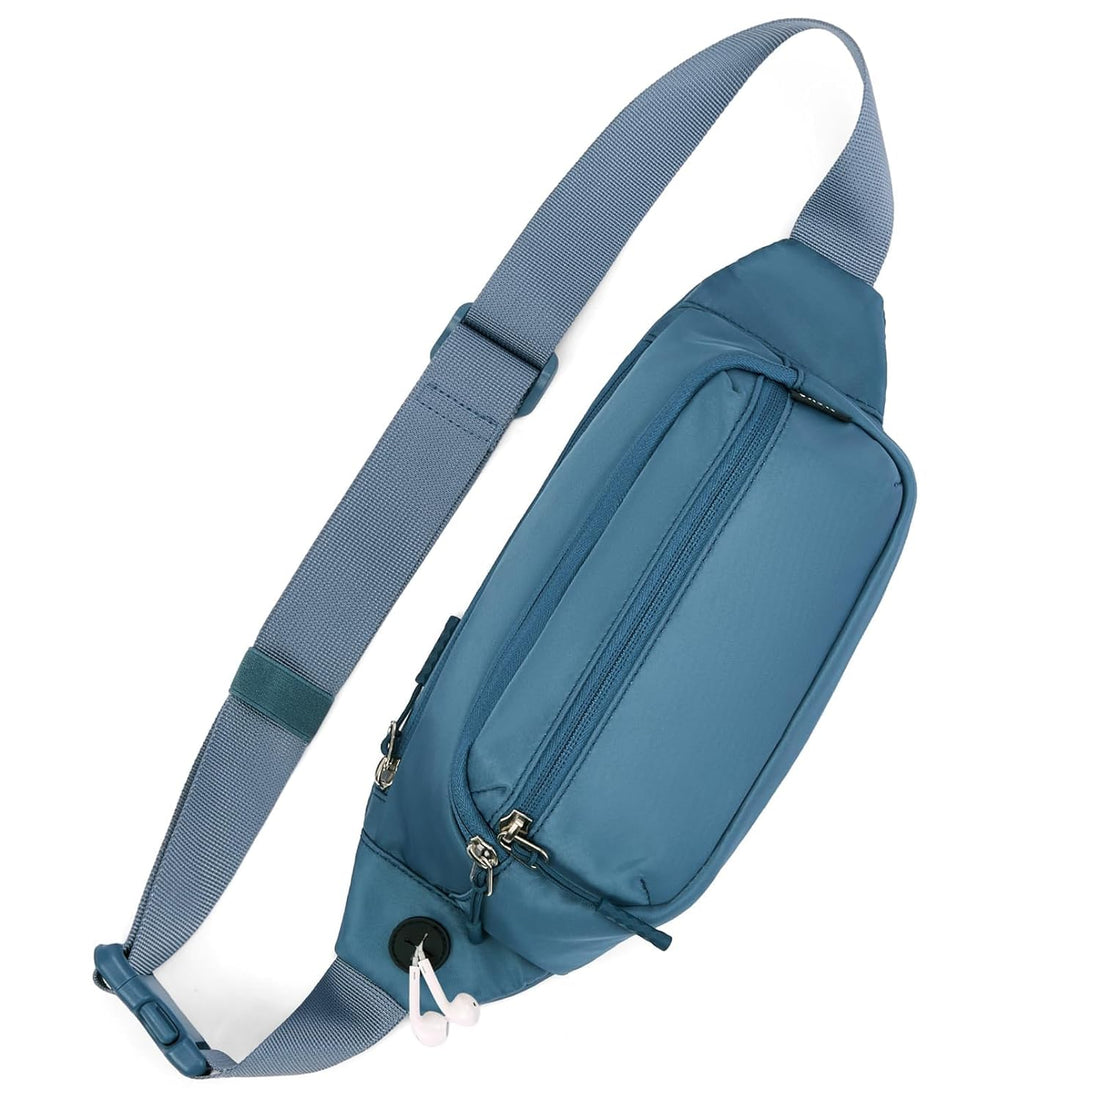 Telena Fanny Packs for Women Men Cross Body Belt Bag Fashion Waist Bag with 4 Zipper Pockets for Traveling Running Walking, Aqua Blue